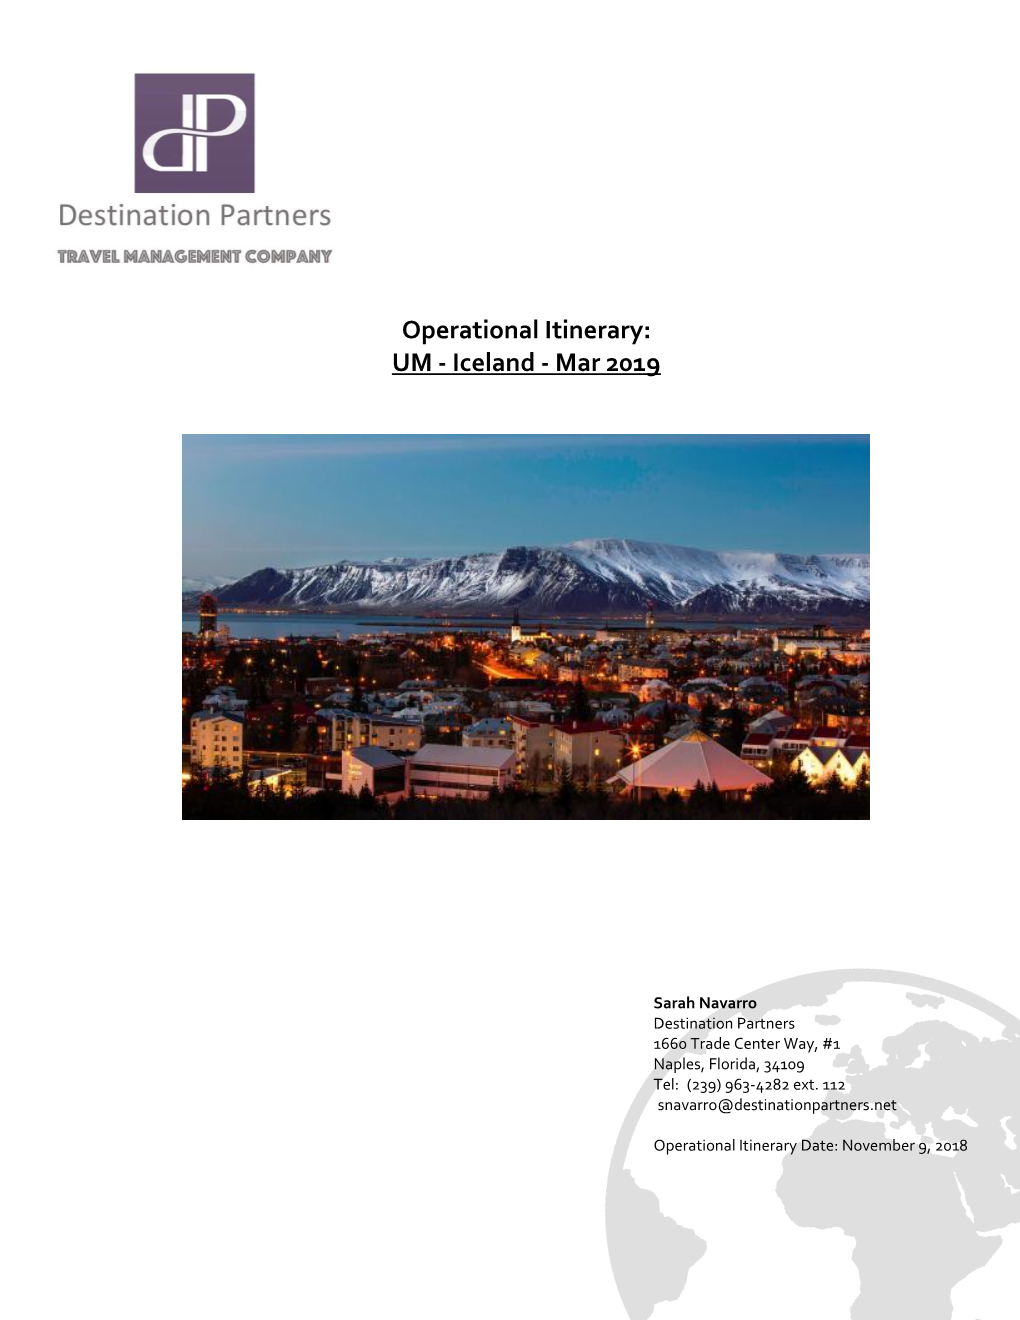 Operational Itinerary: UM - Iceland - Mar 2019